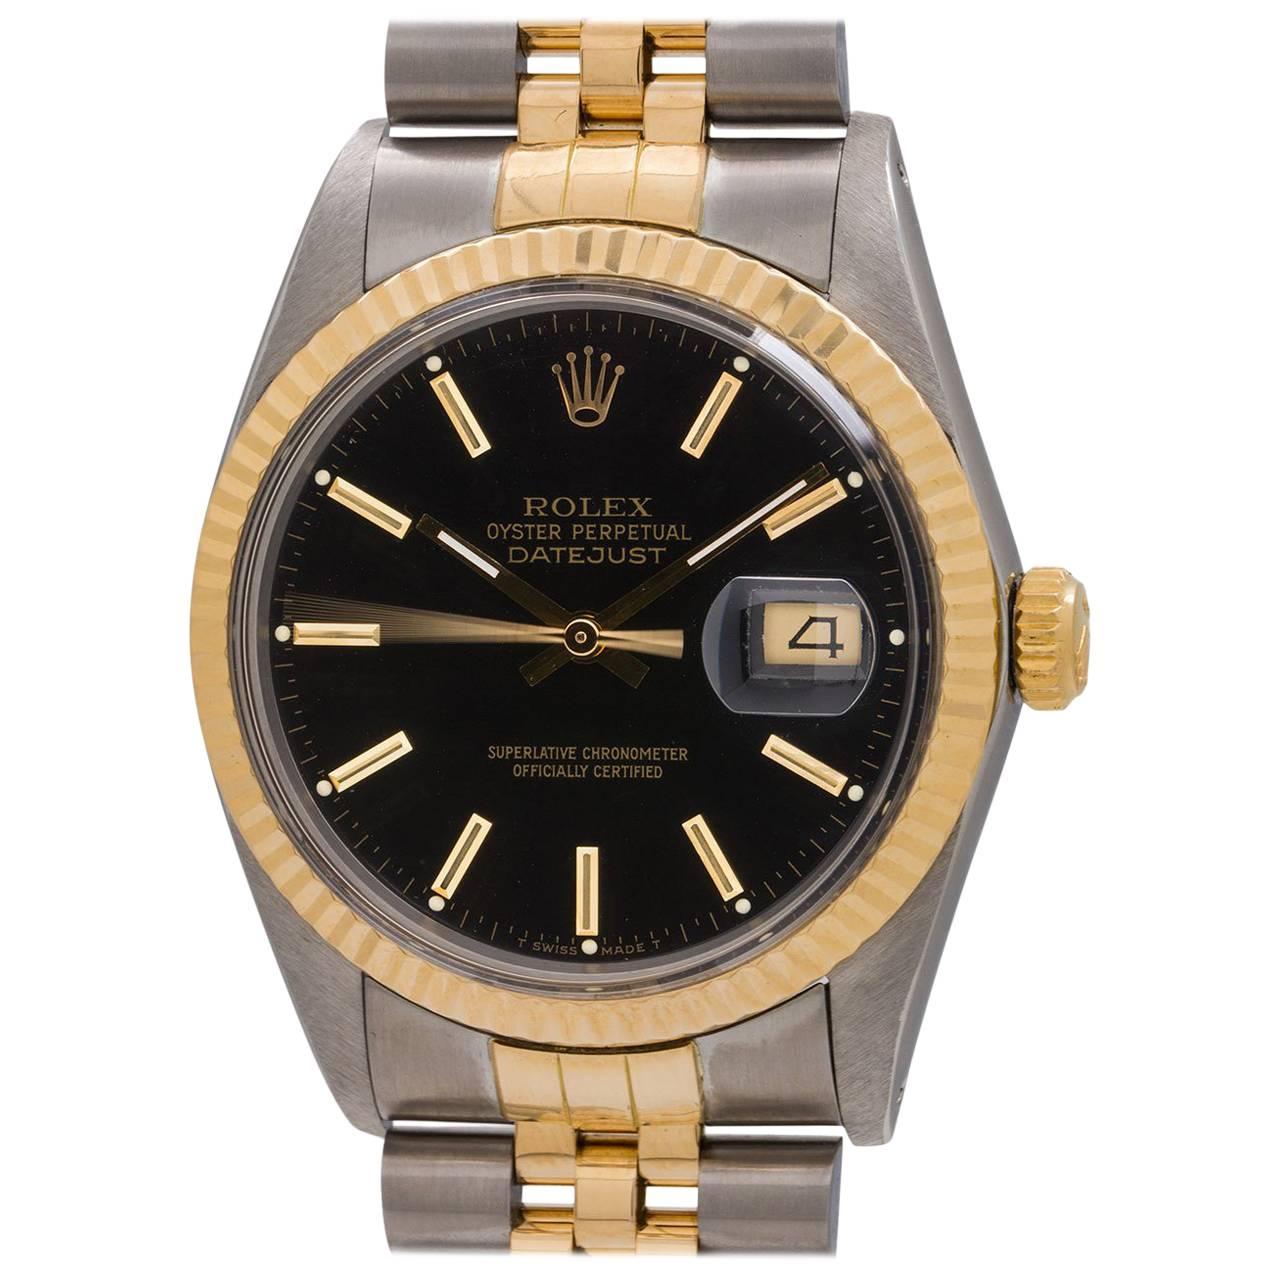 Rolex yellow gold stainless steel Datejust self winding wristwatch, circa 1986 